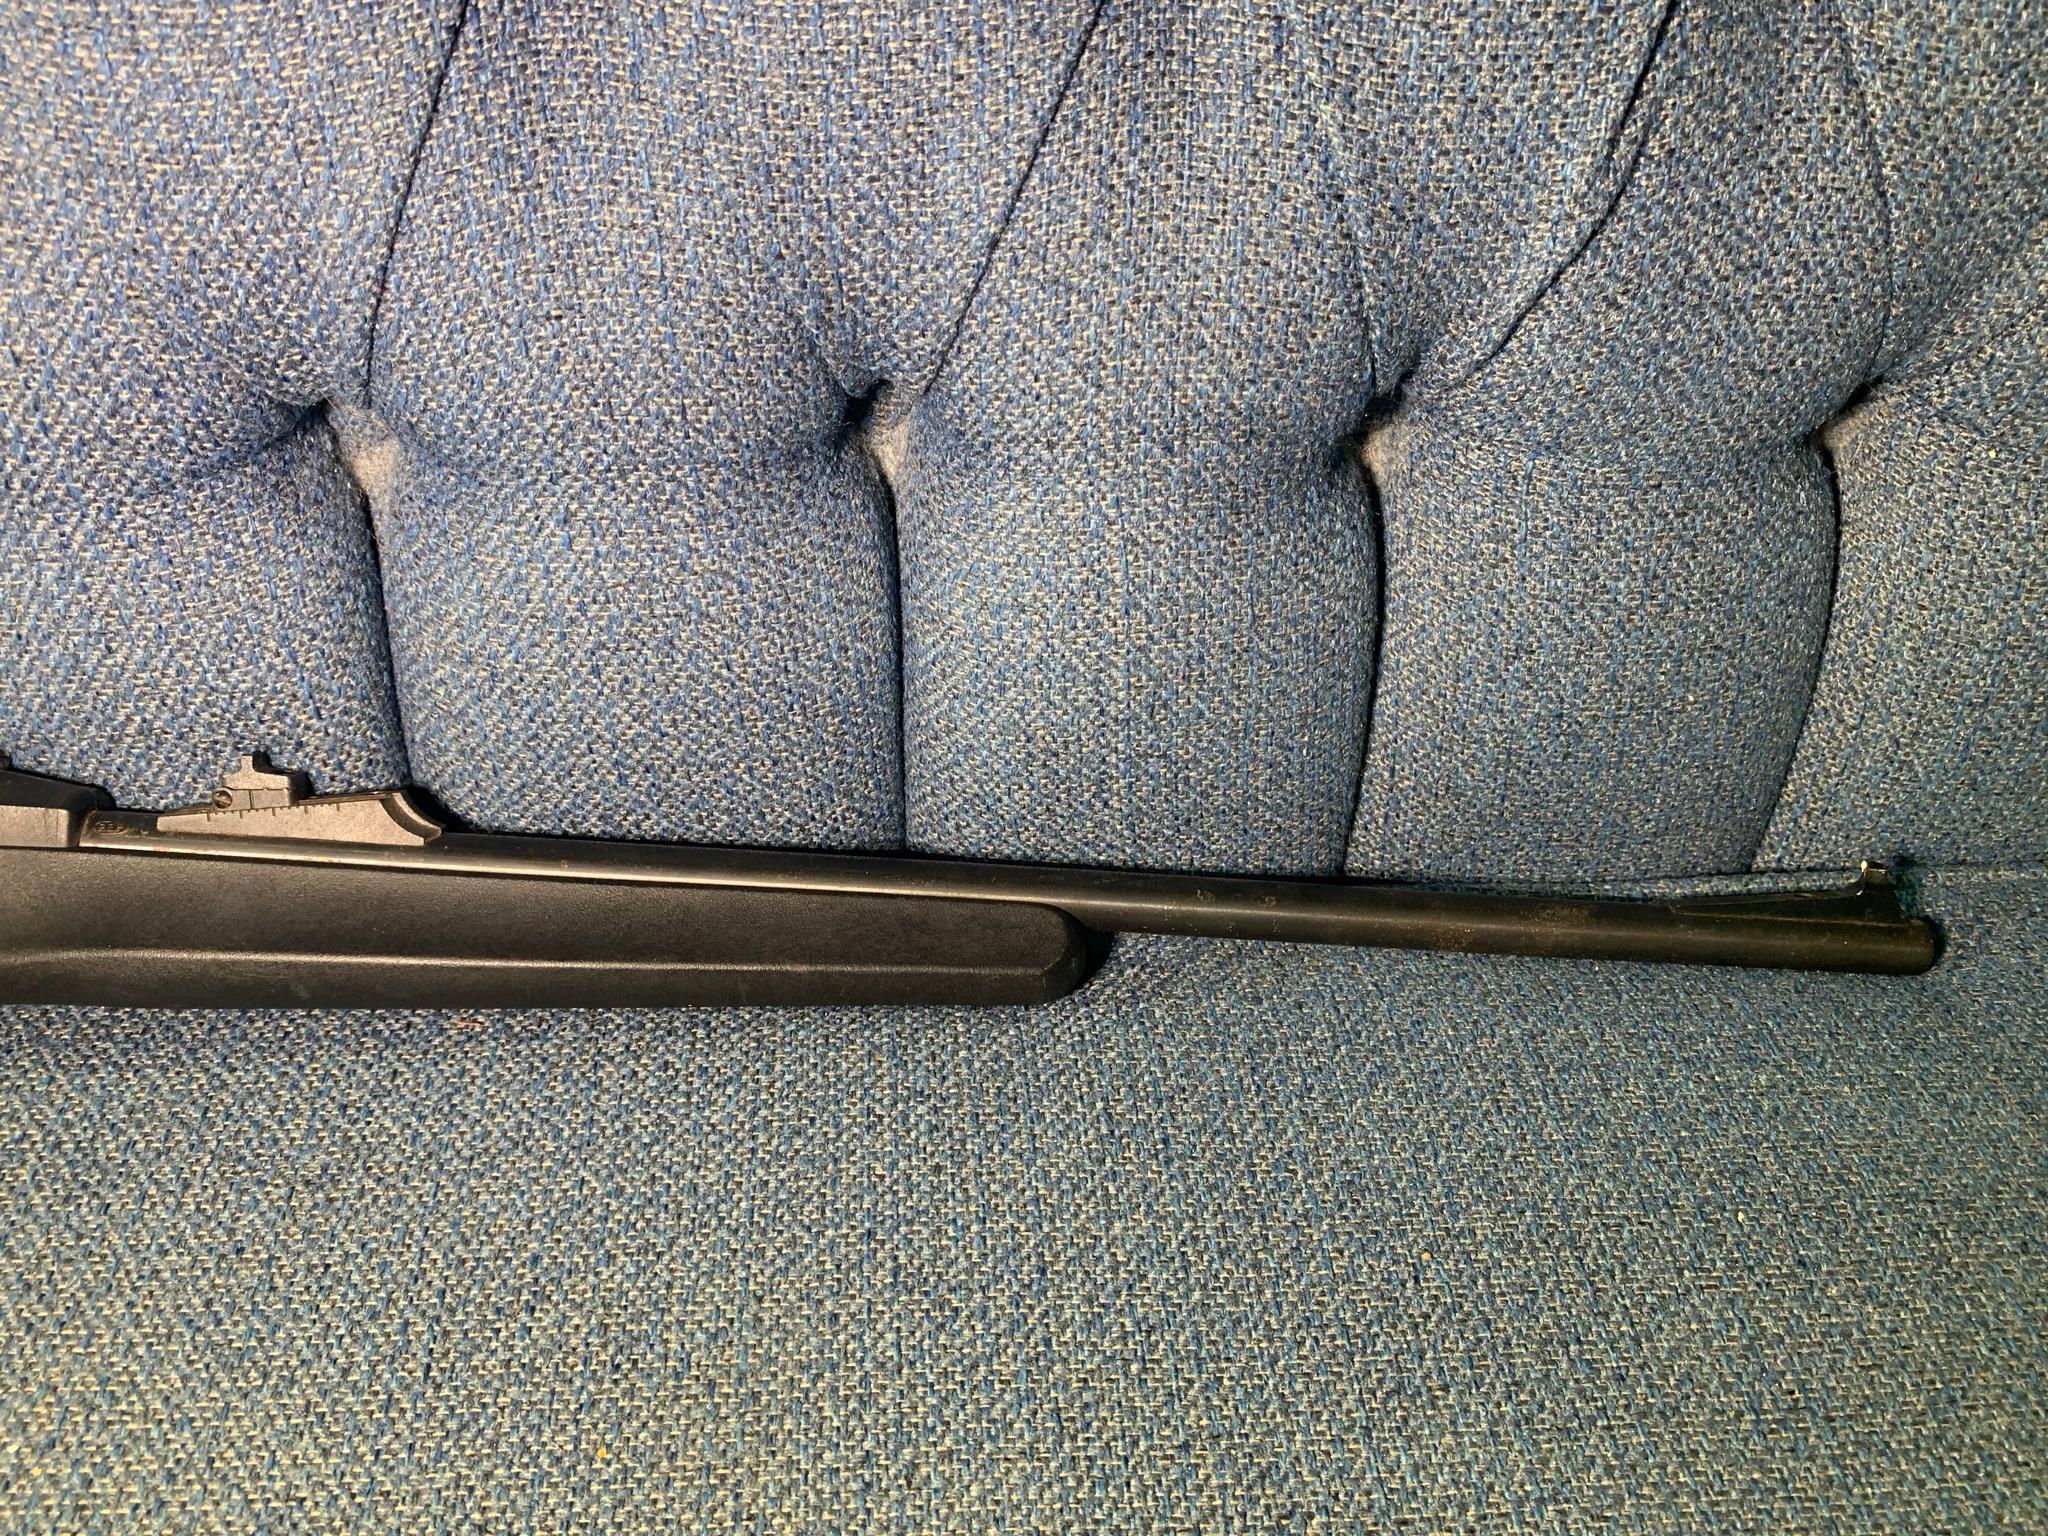 Remington Model 522 Viper 22 Long Rifle with Magazine